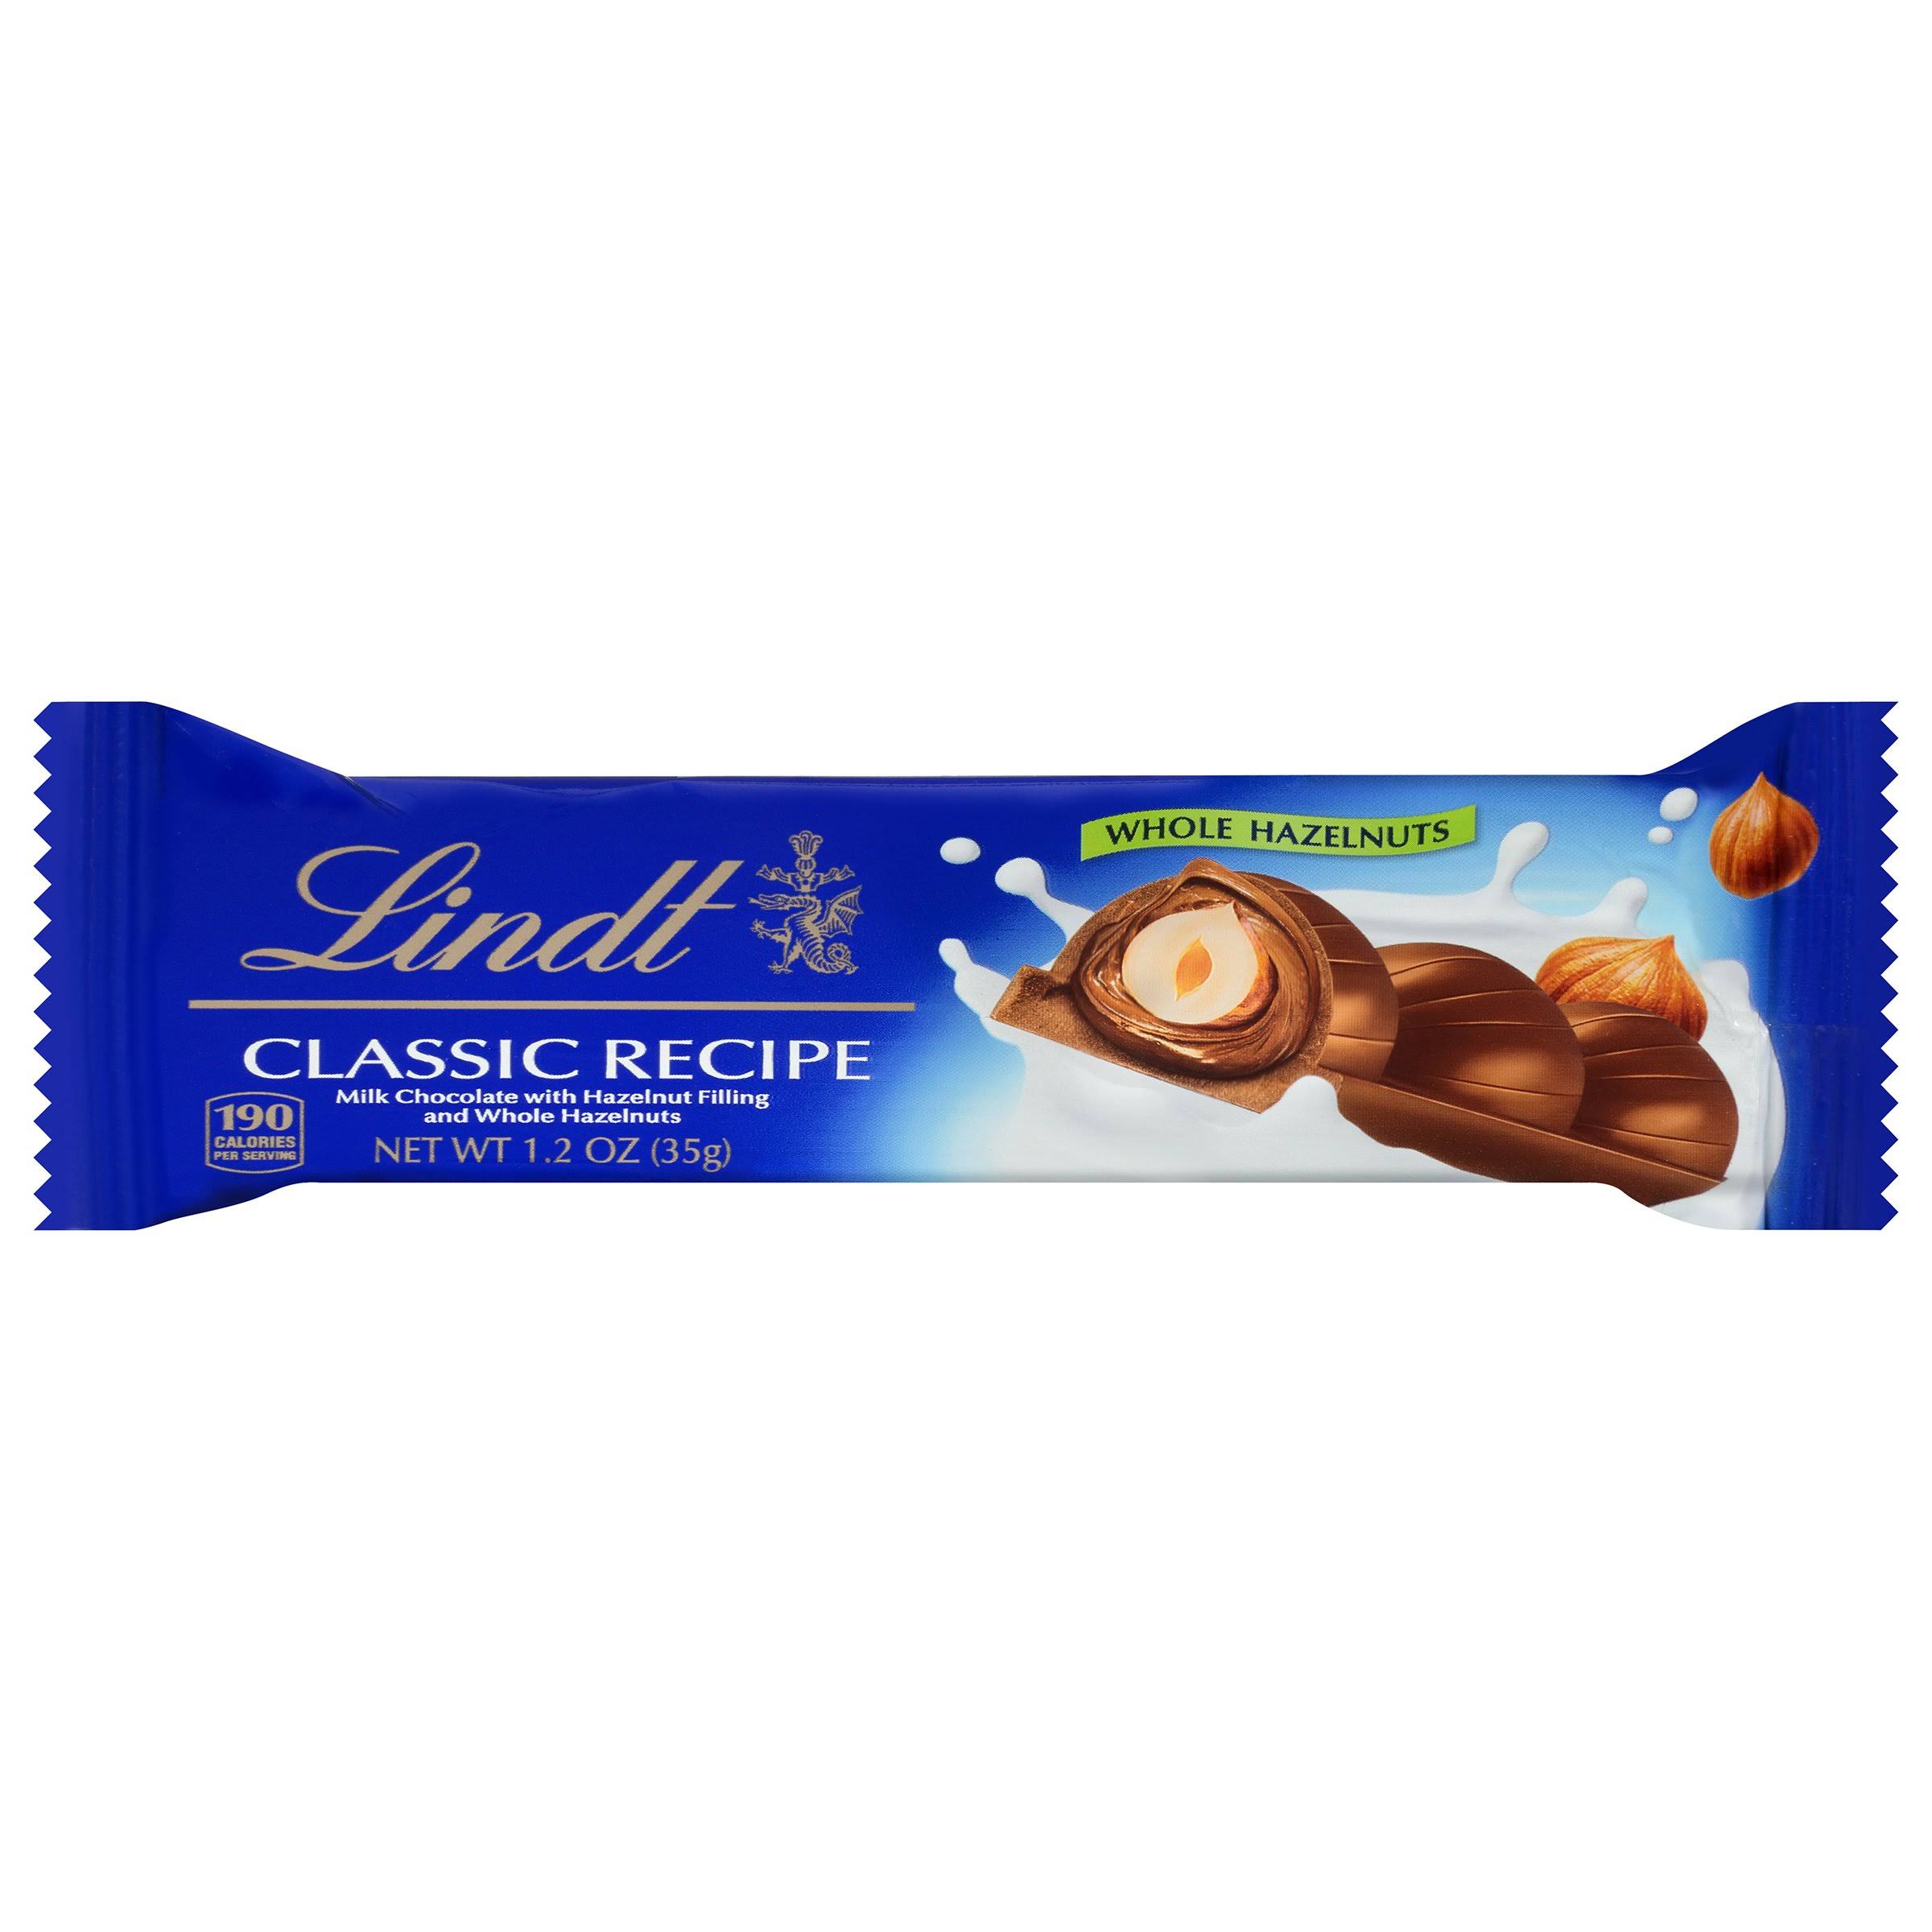 Lindt Classic Recipe Milk Chocolate, Whole Hazelnuts, Classic Recipe - 1.2 oz